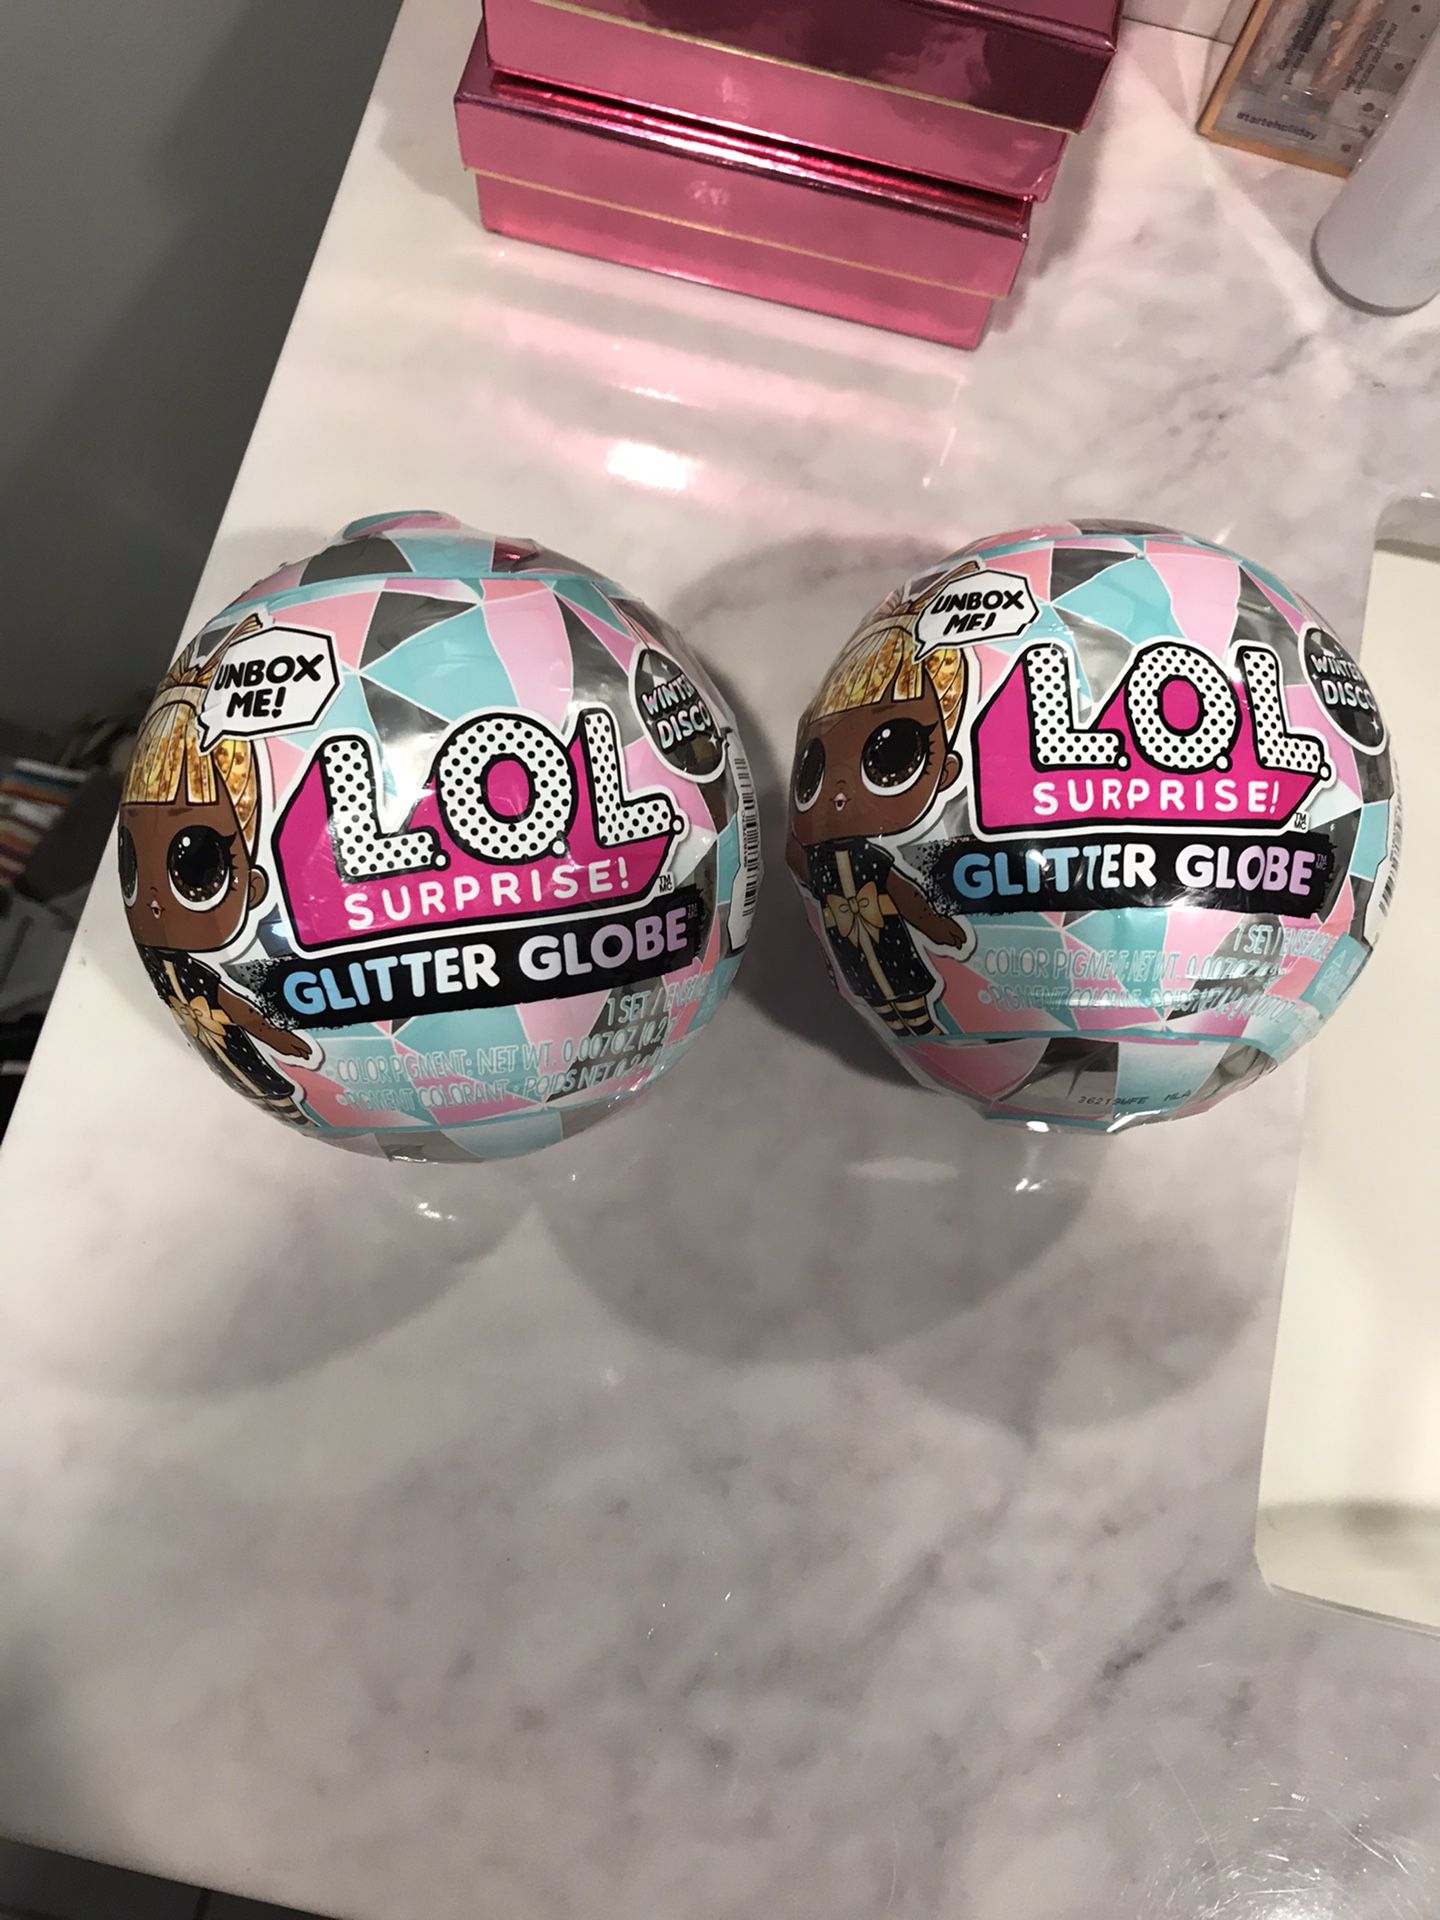 LOL DOLLS surprise Glitter Globes